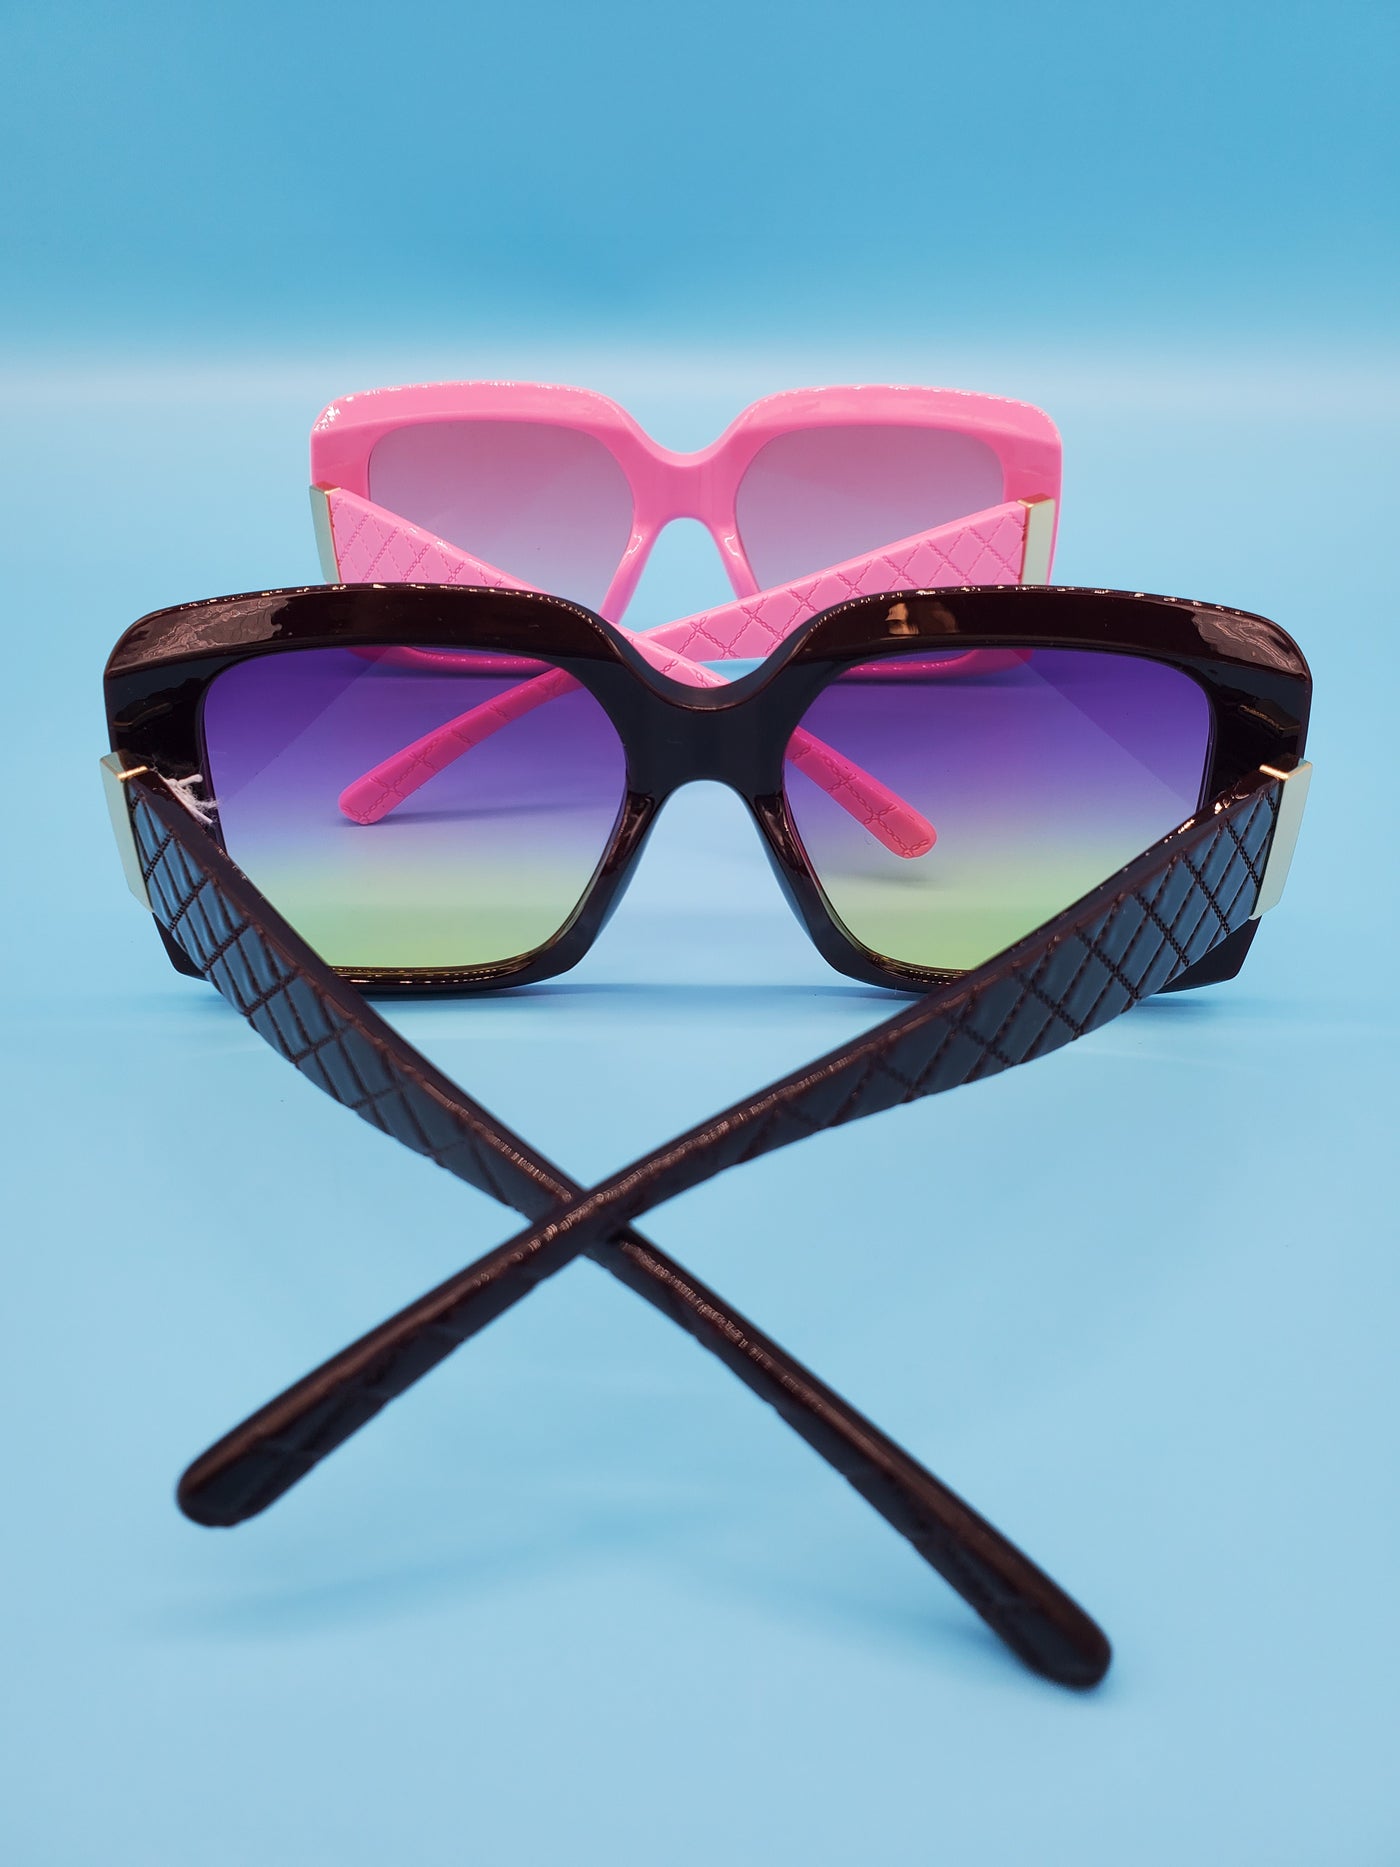 Fashionable Sunglasses